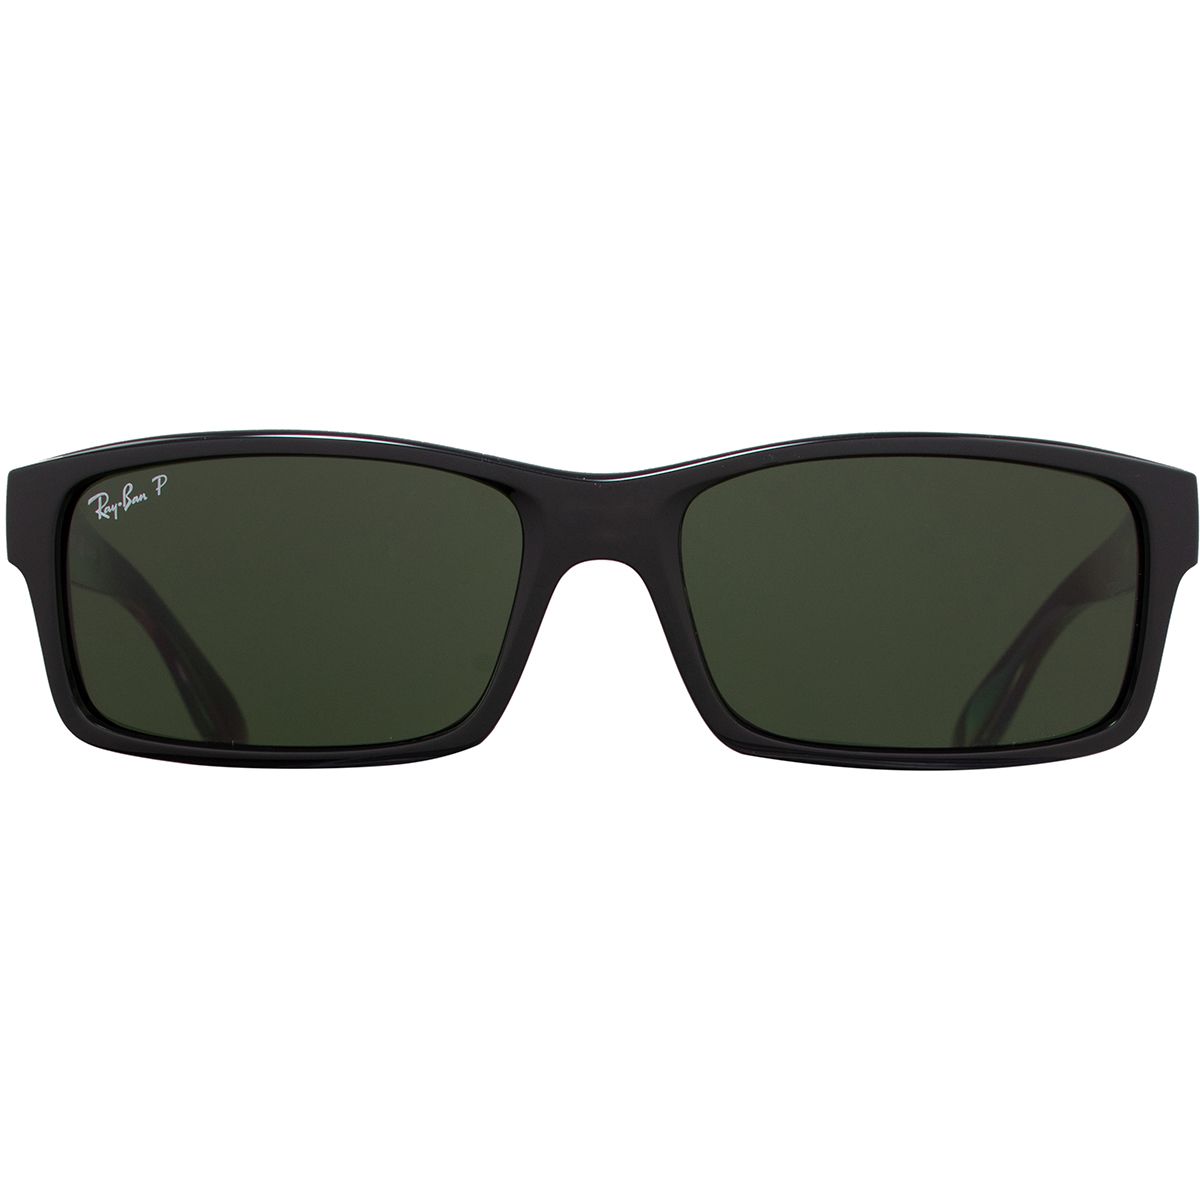 Ray-Ban RB4151 Polarized Sunglasses - Men